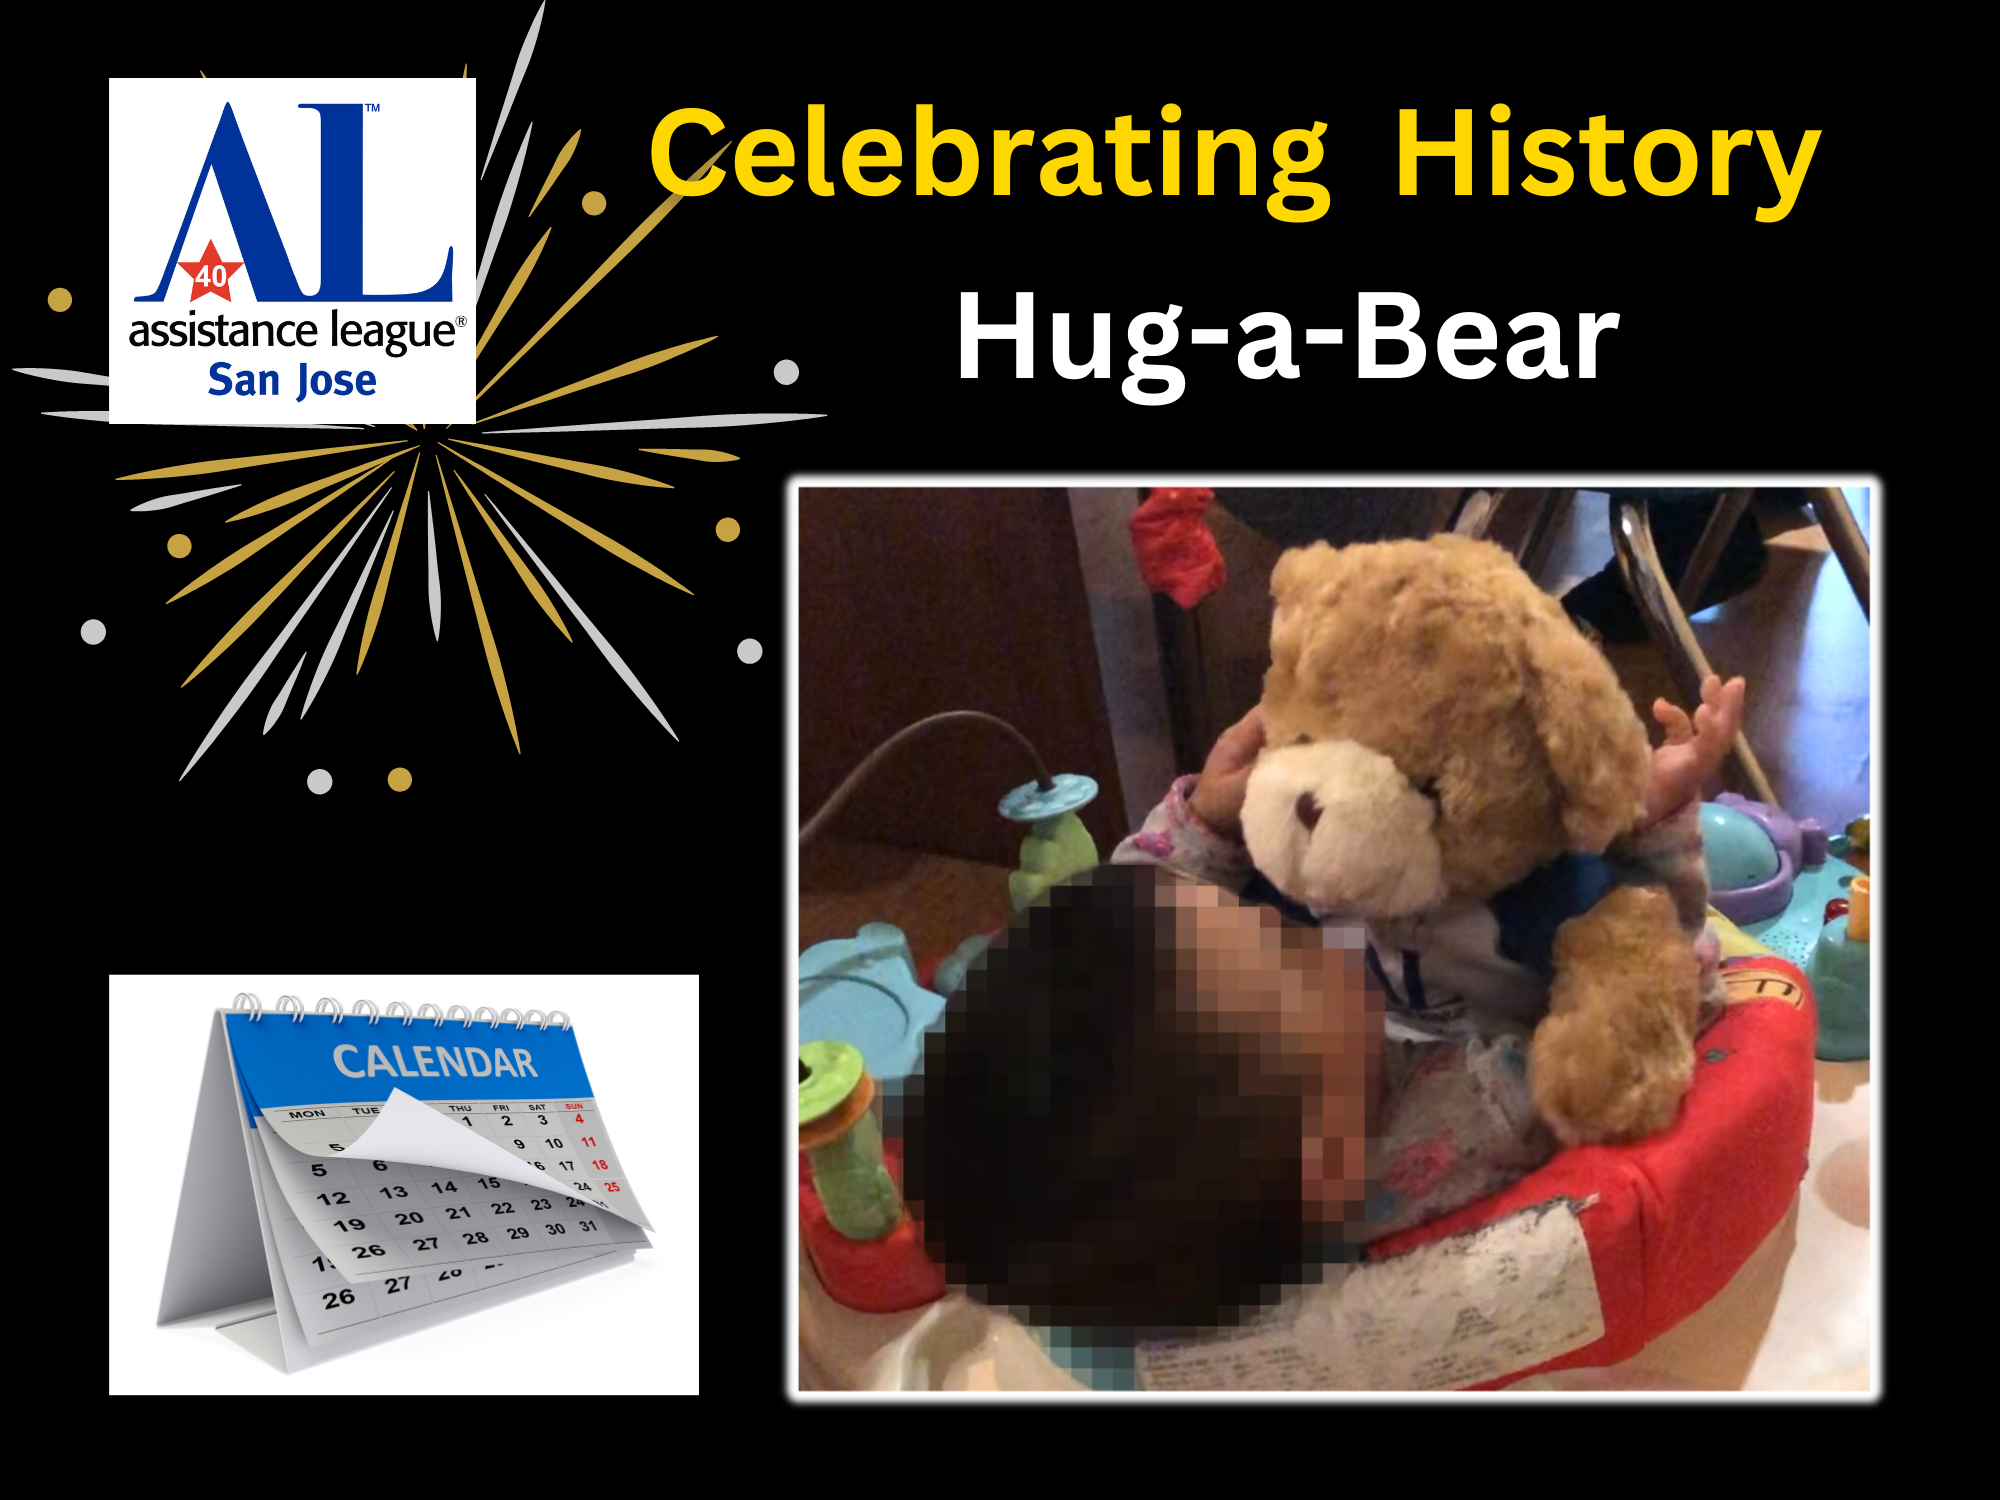 Celebrating History - Hug-a-Bear